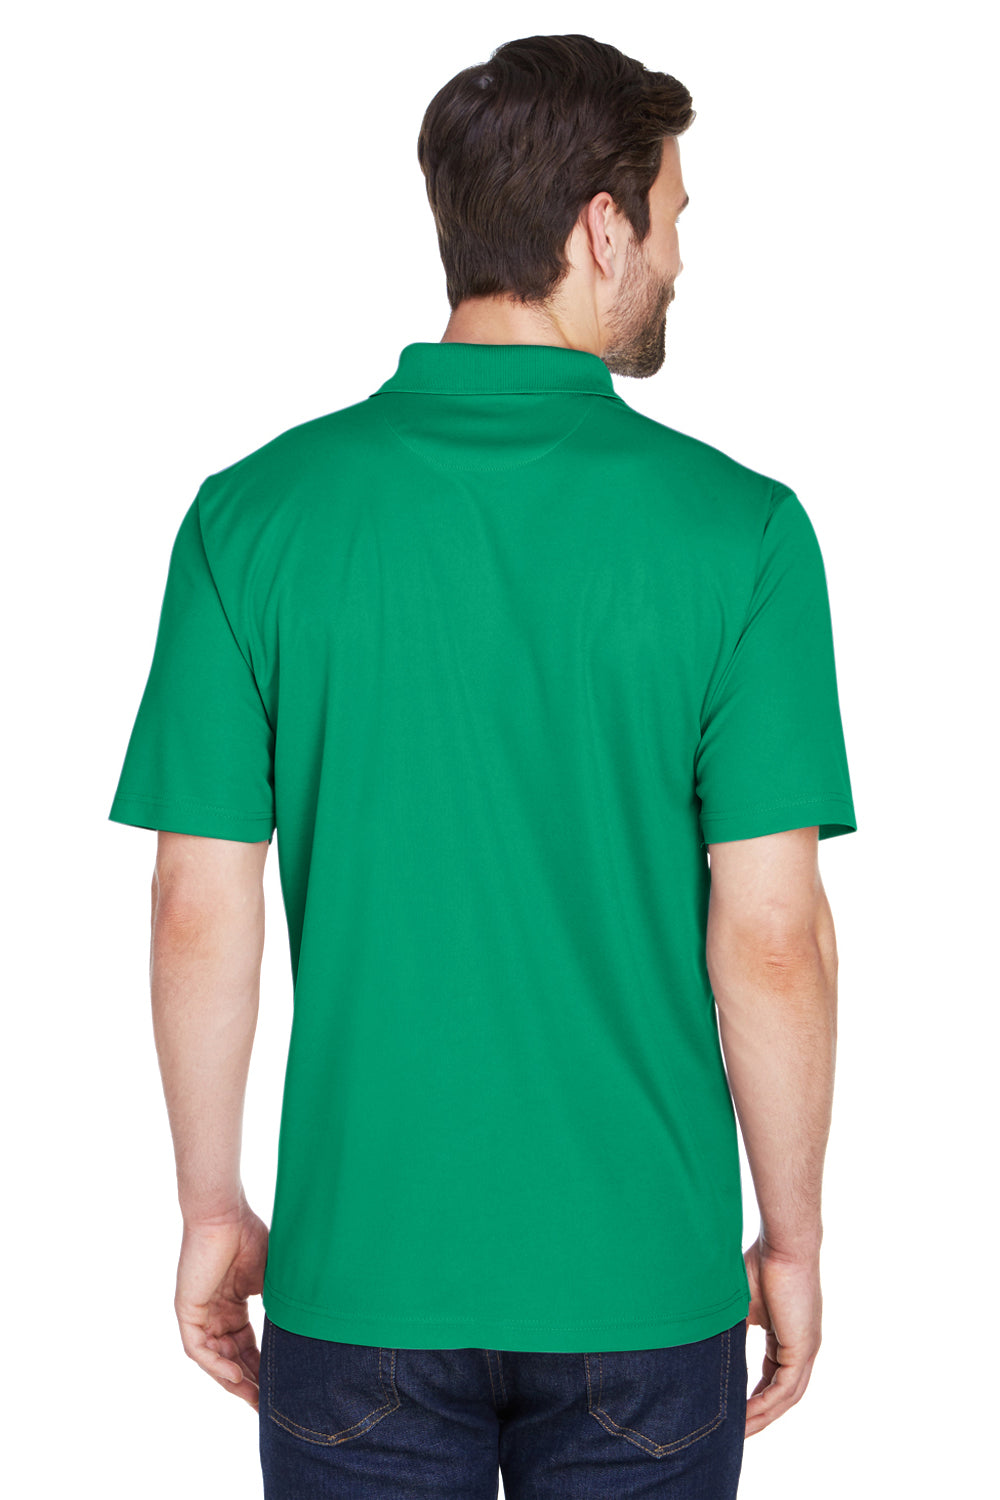 UltraClub 8210 Mens Cool & Dry Moisture Wicking Short Sleeve Polo Shirt Kelly Green Back